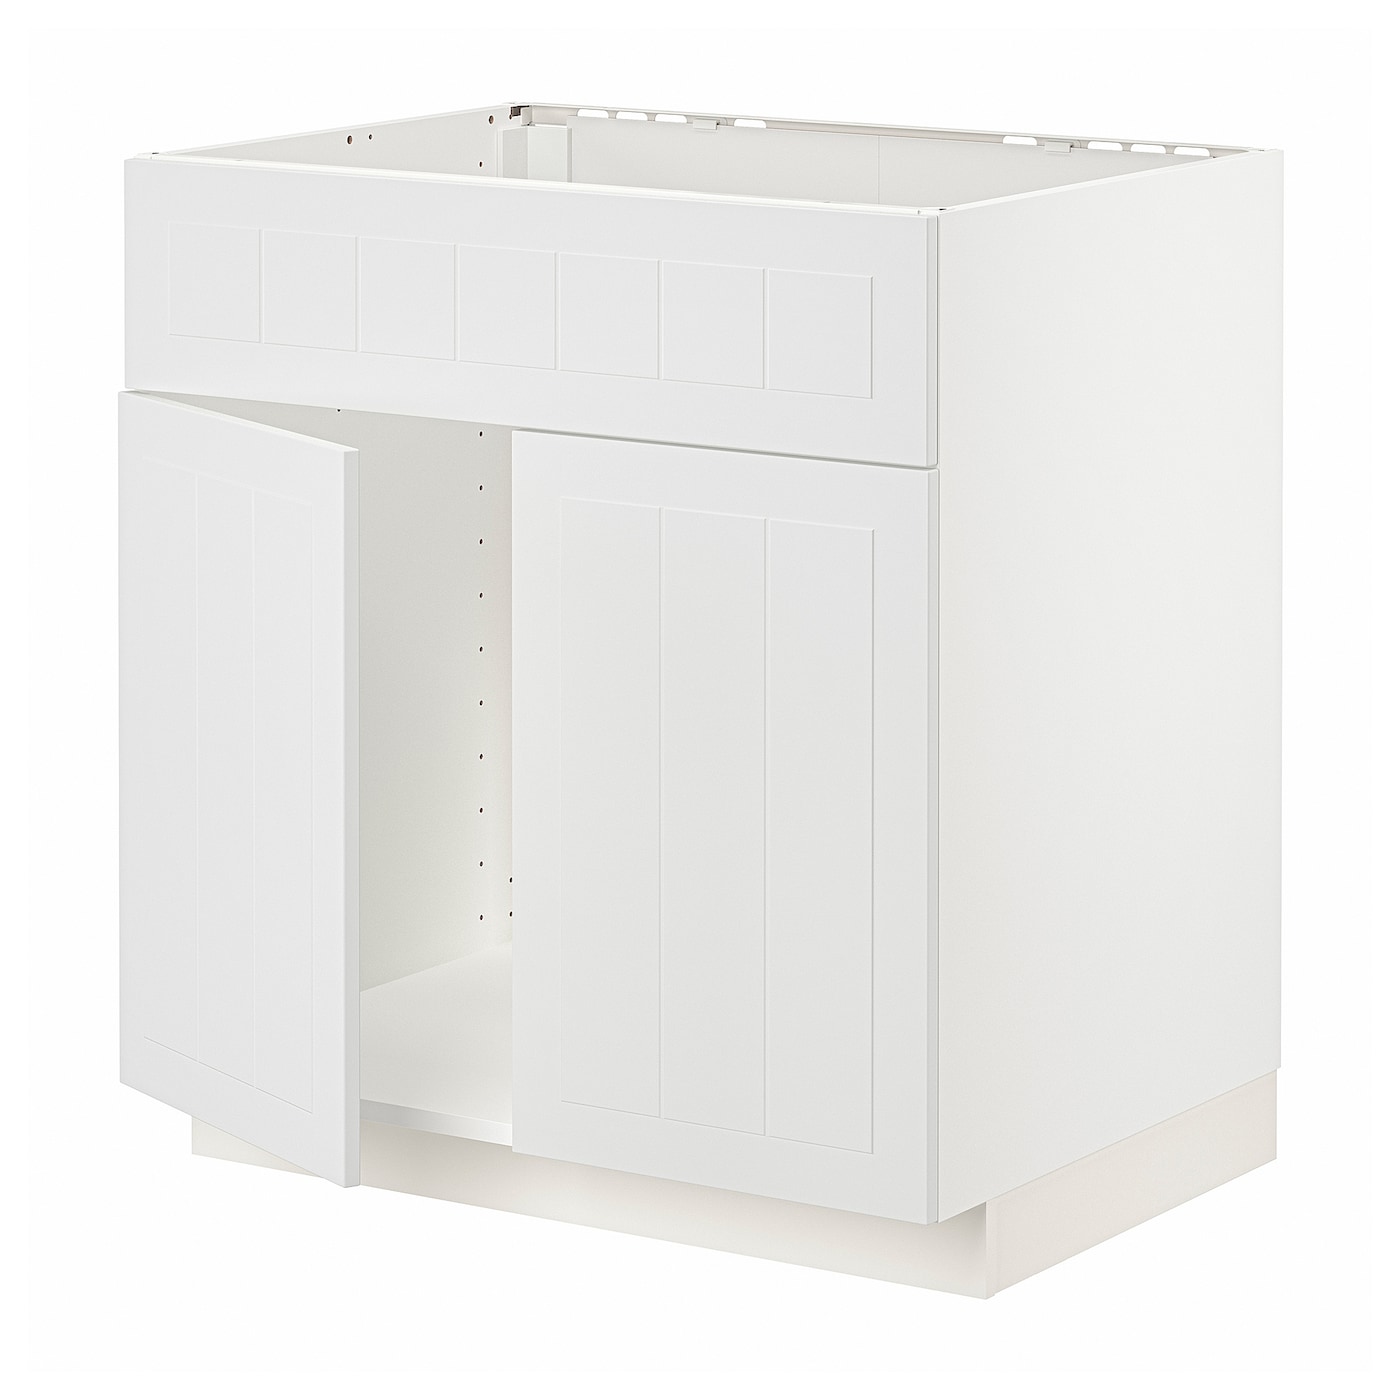 Напольный шкаф - METOD IKEA/ МЕТОД ИКЕА,  88х80 см, белый